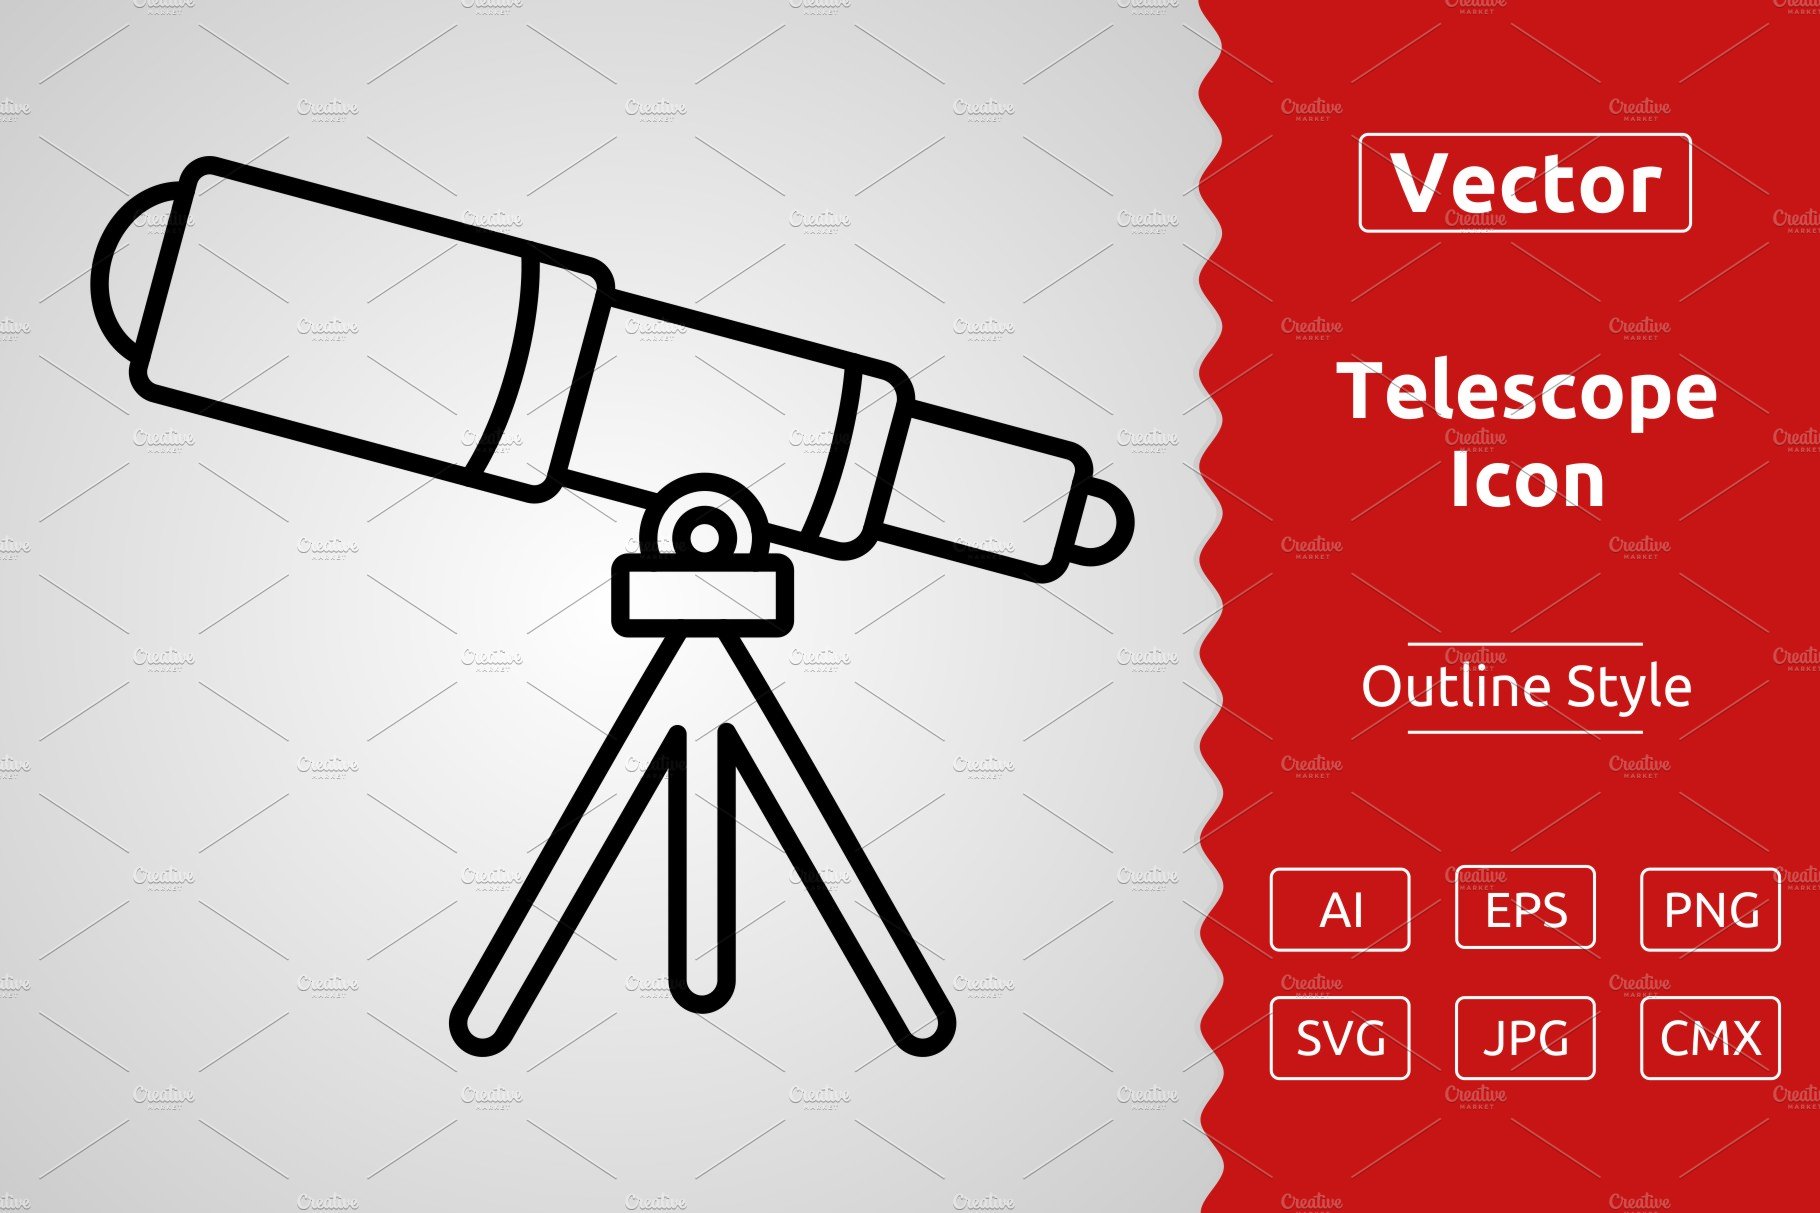 Vector Telescope Outline Icon cover image.